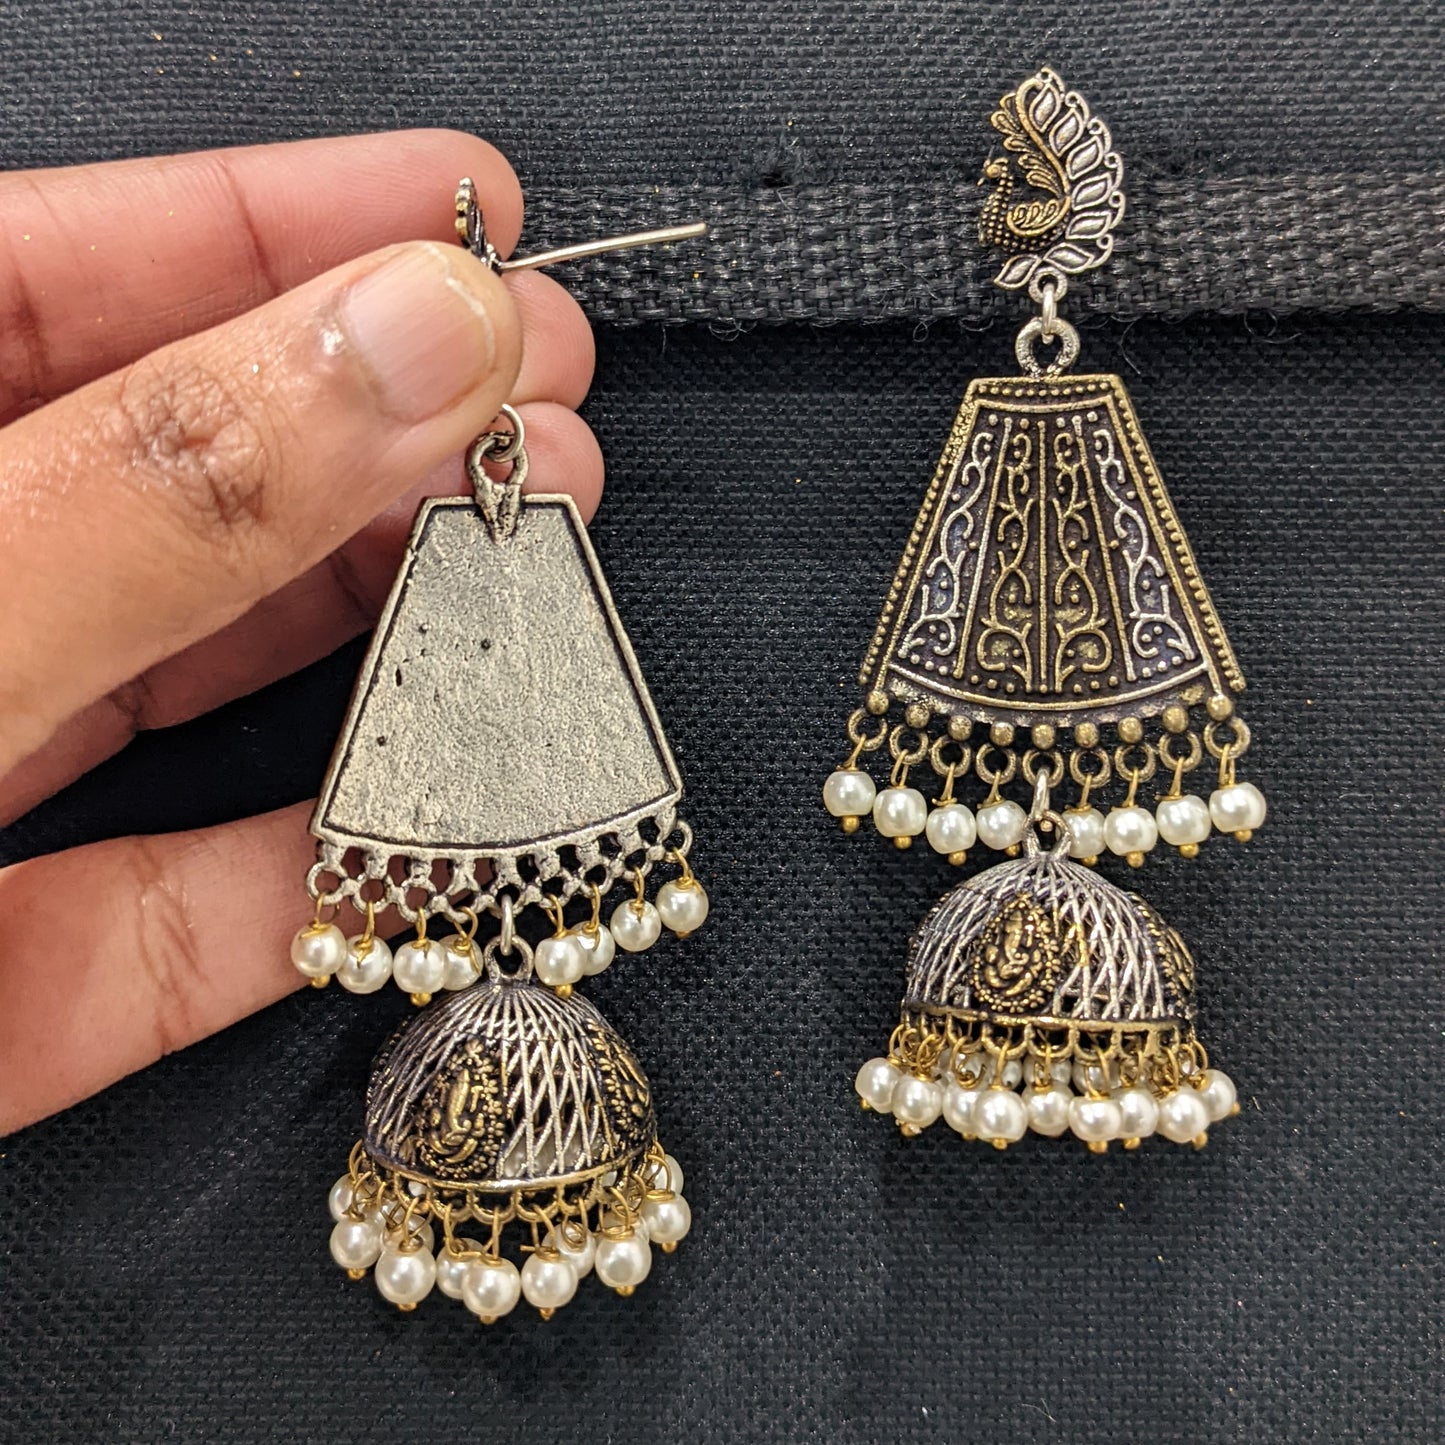 Lord Ganesh Dual tone Oxidized Silver Jhumka Earrings